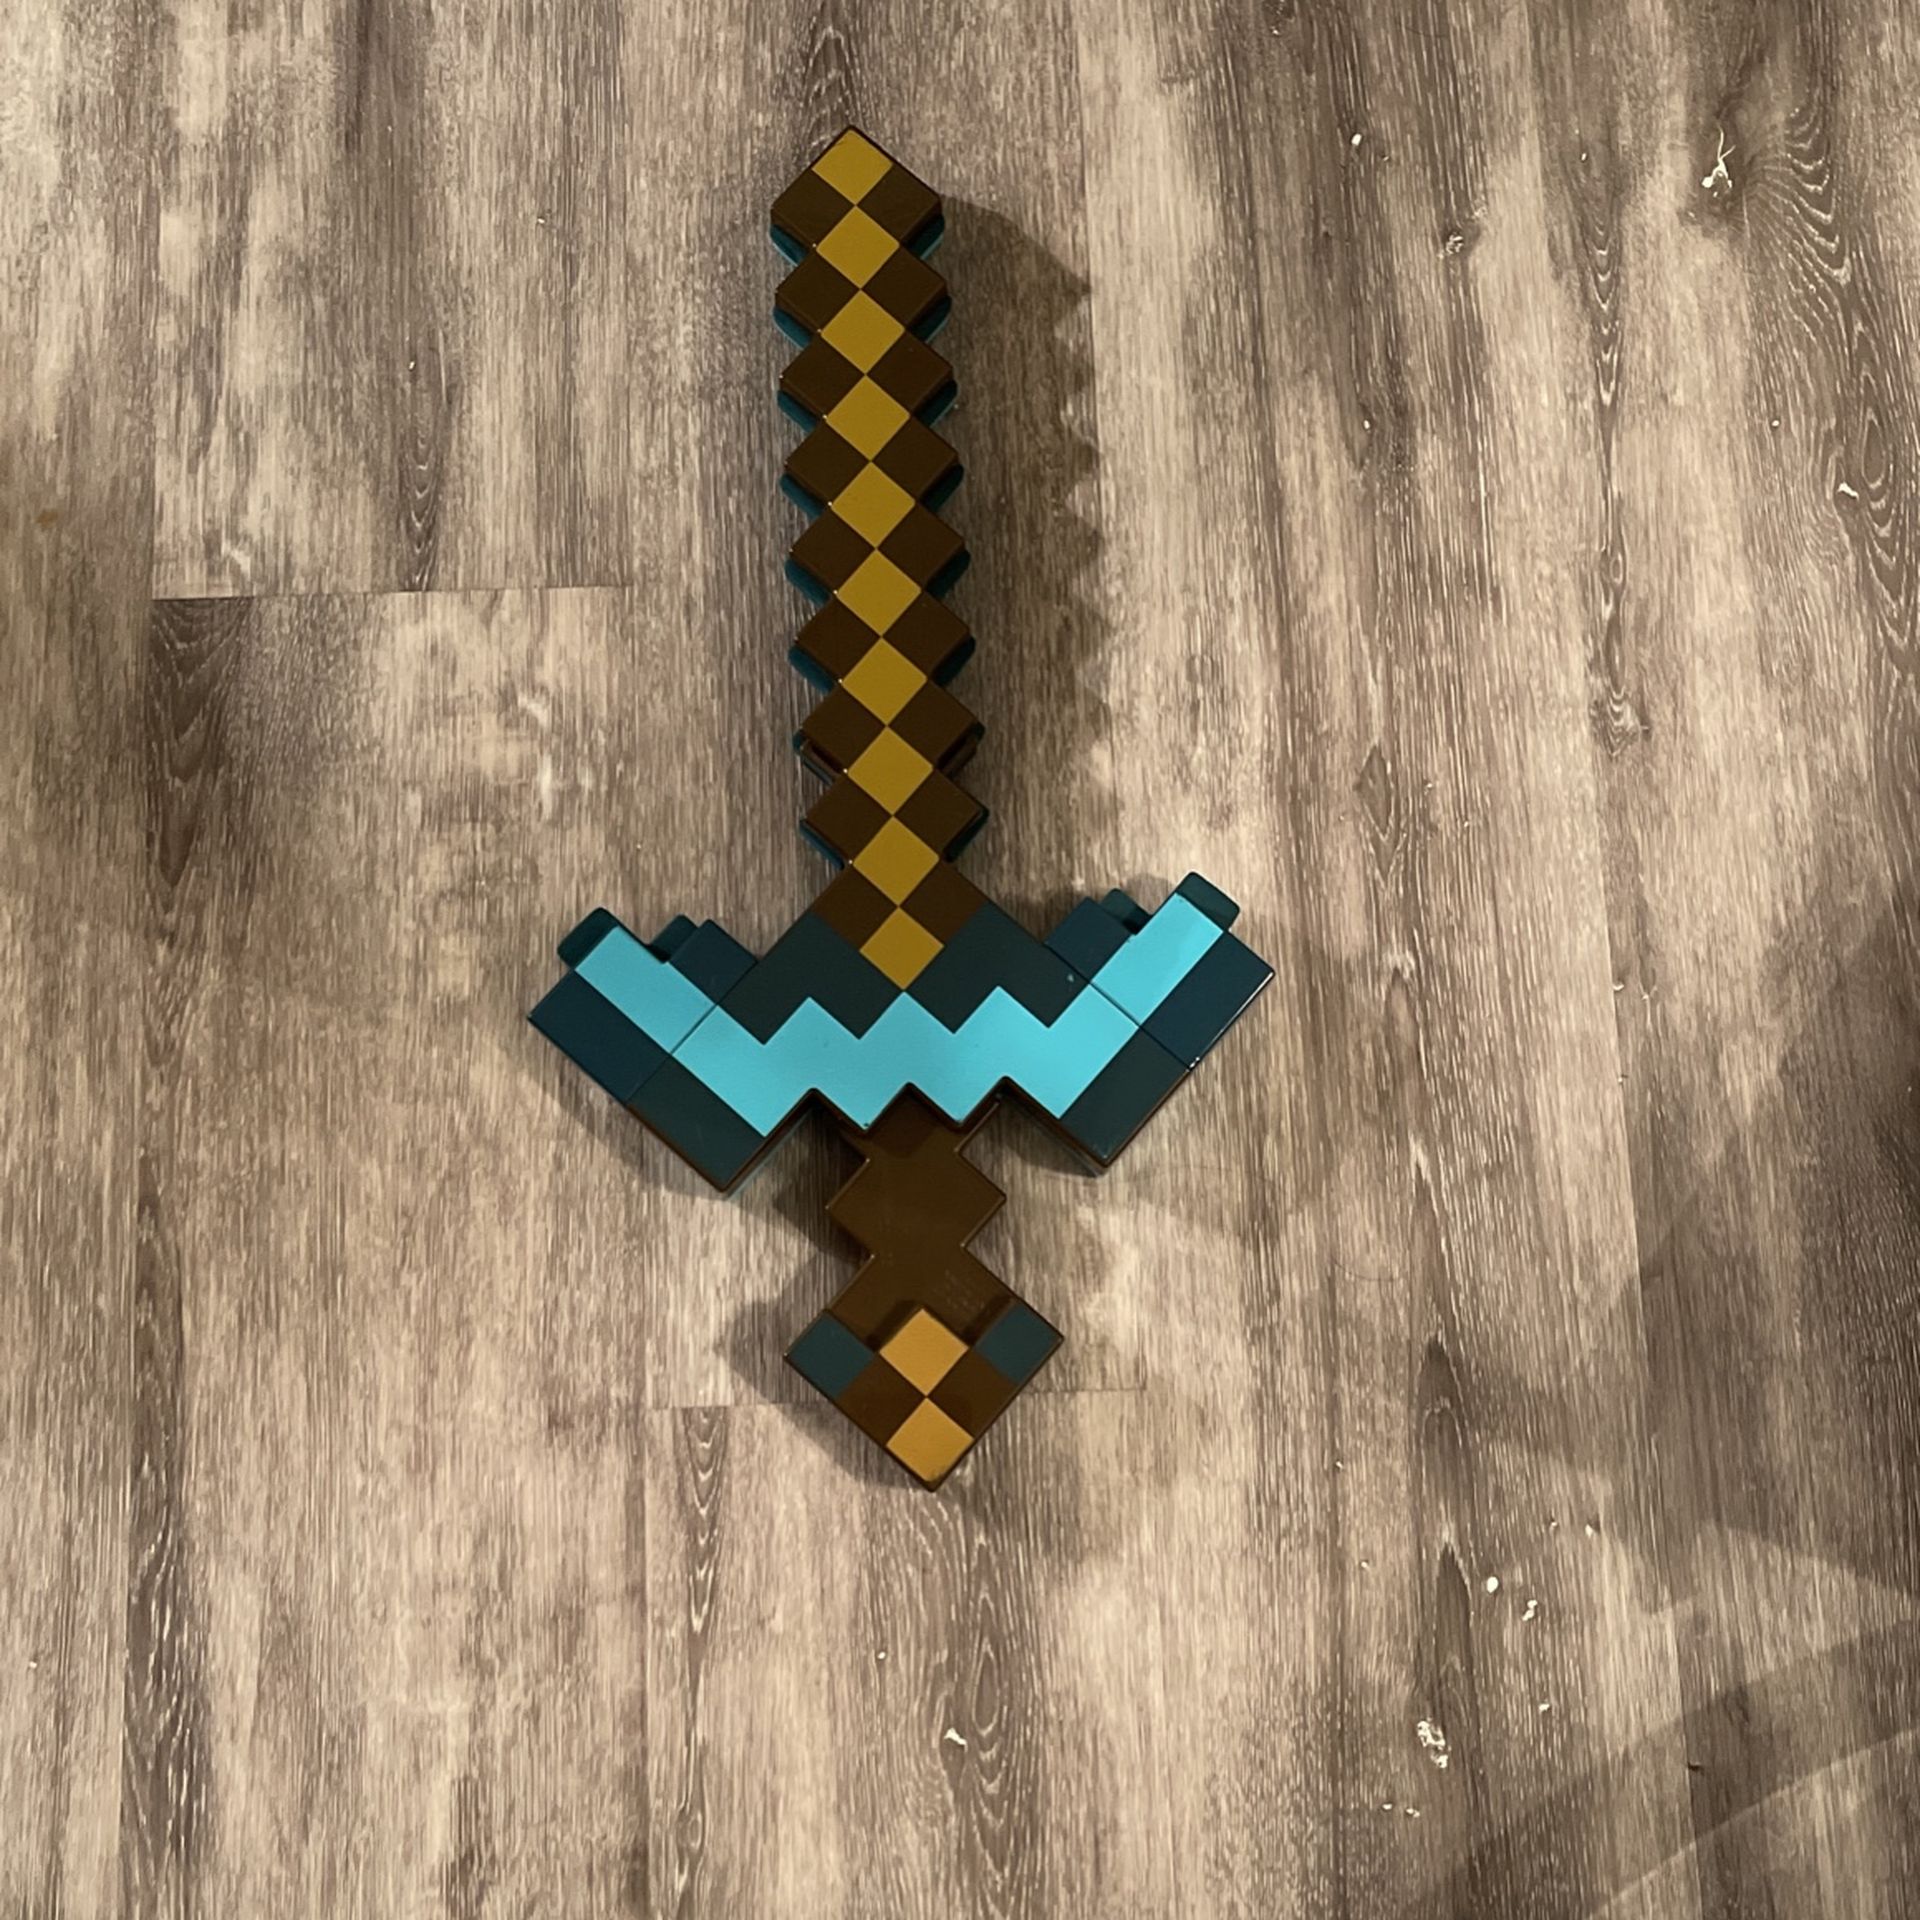 Minecraft Trasforming Sword & Pickaxe